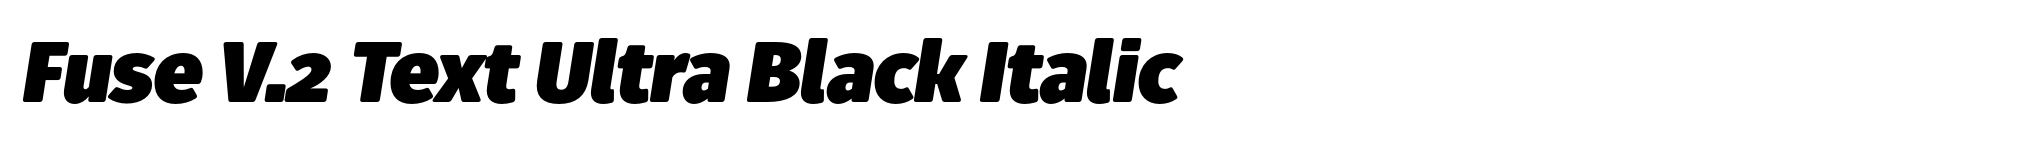 Fuse V.2 Text Ultra Black Italic image